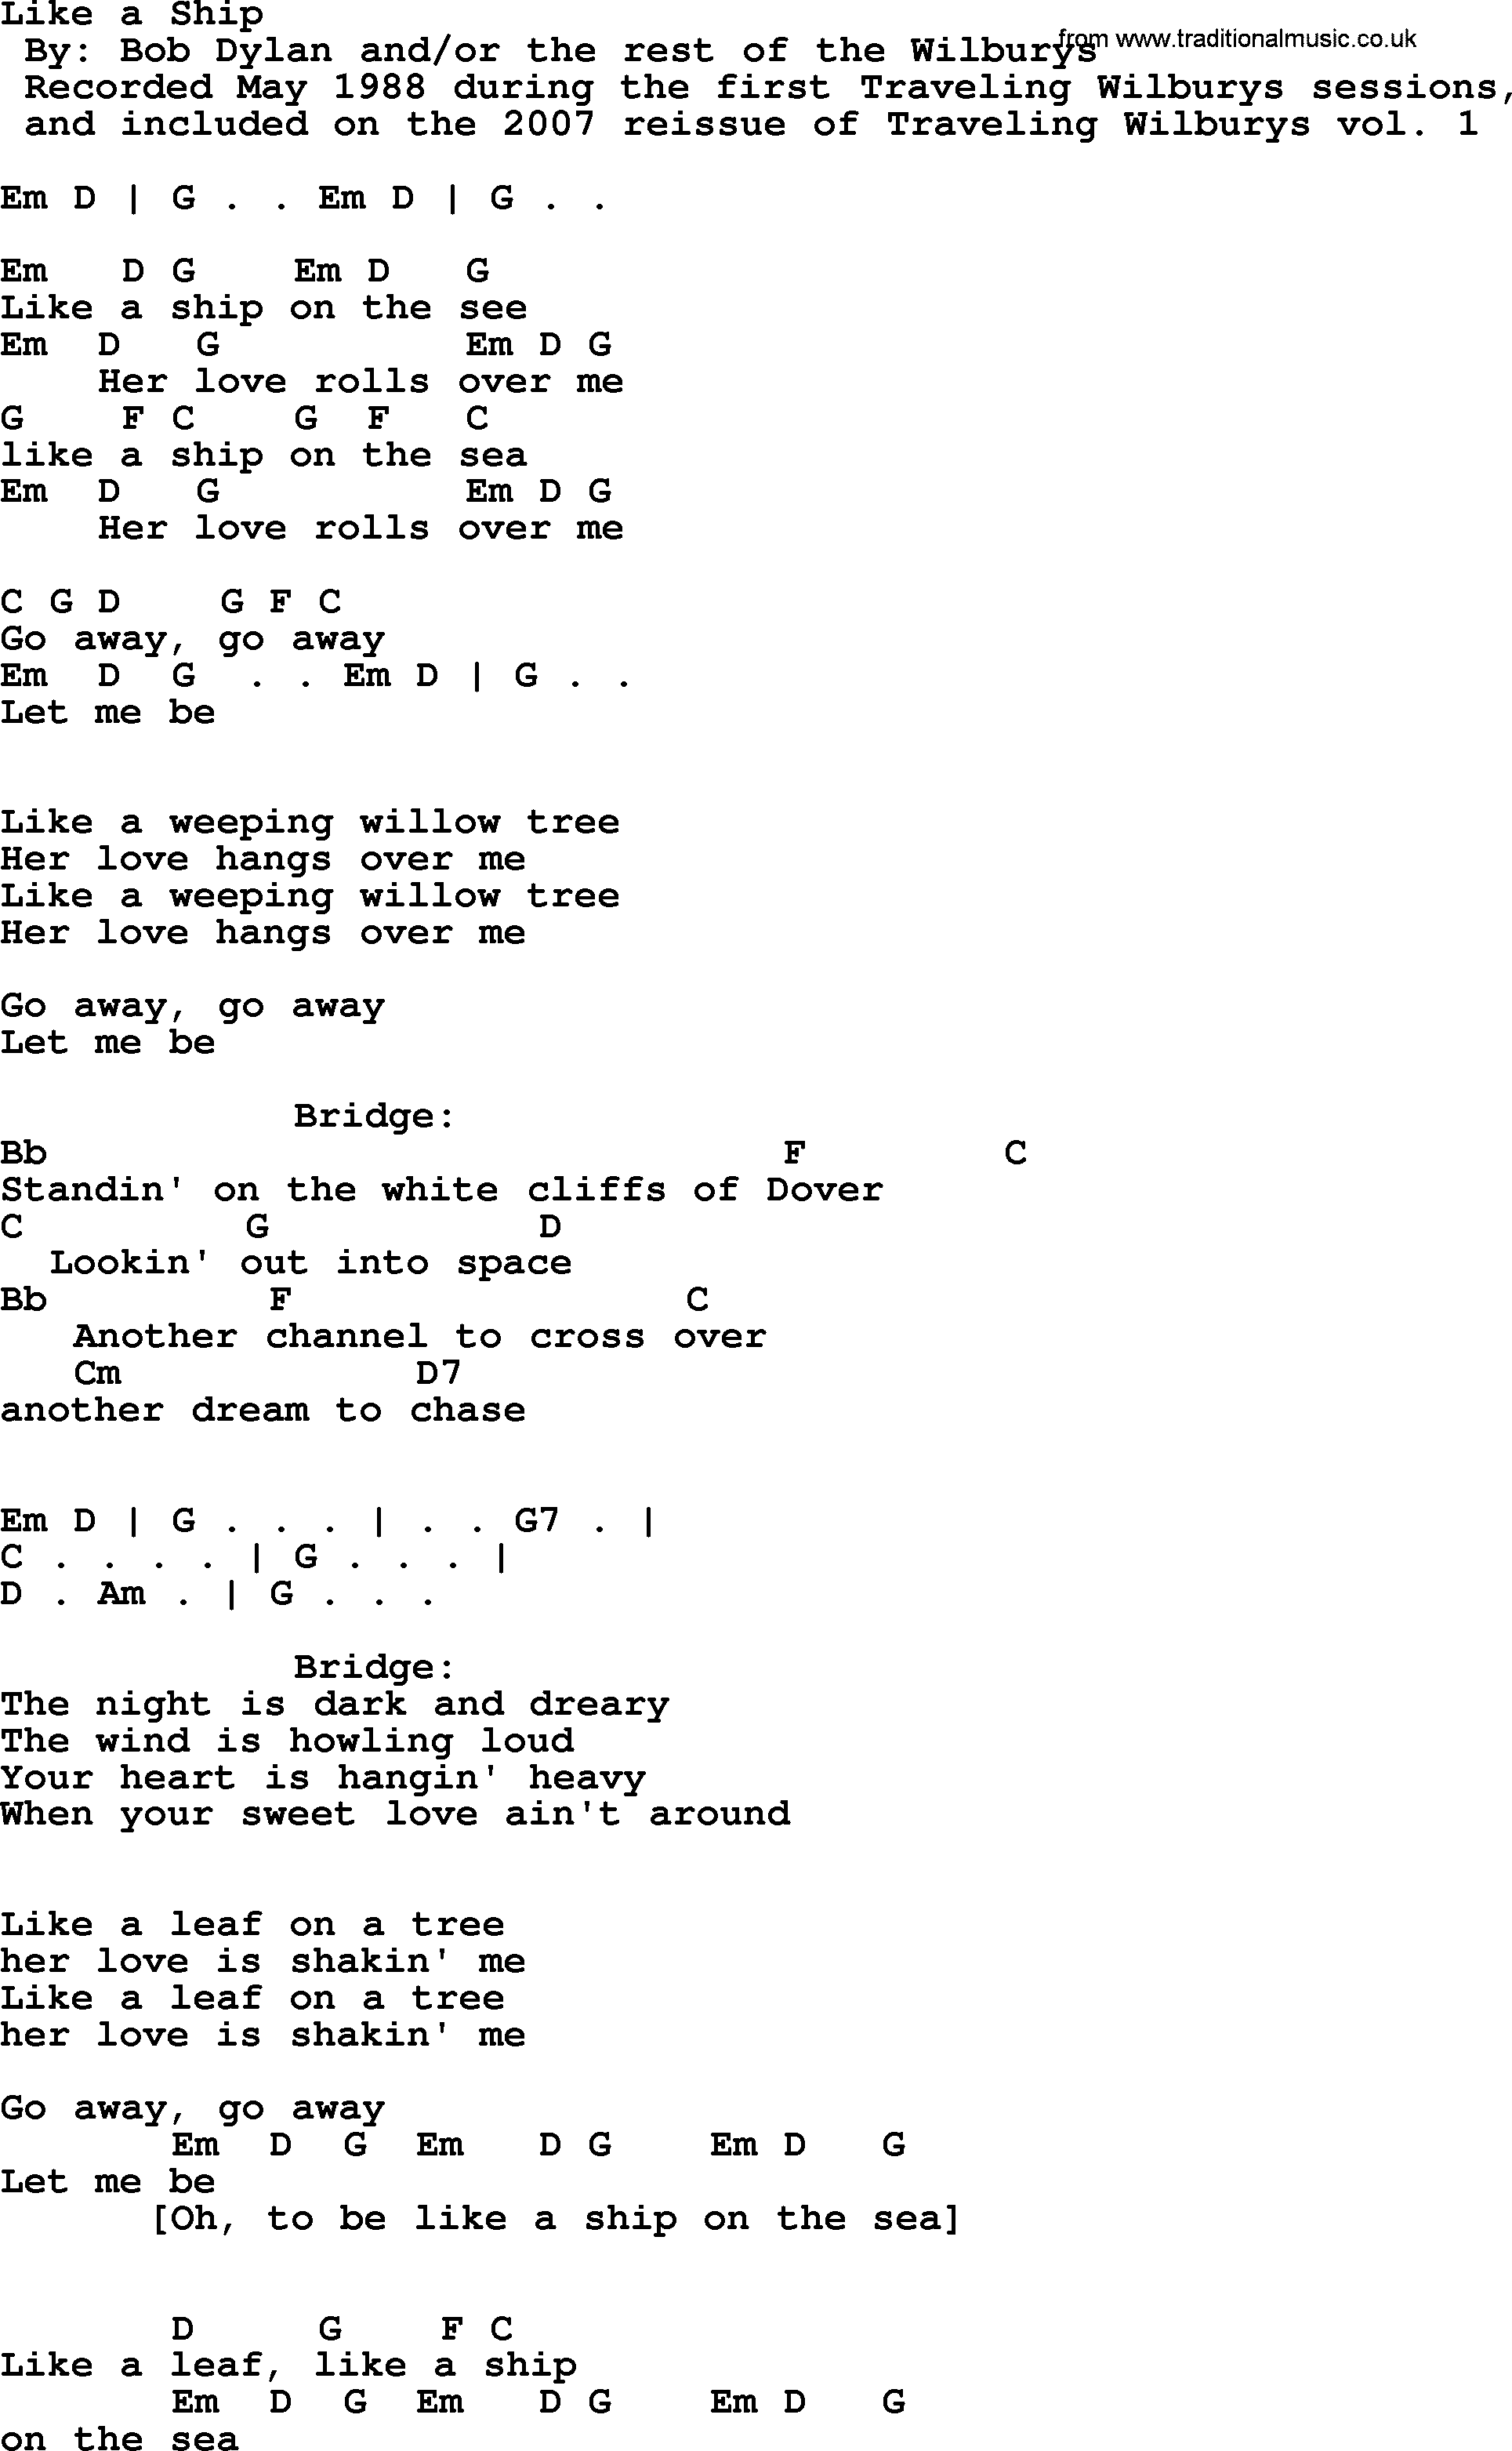 Bob Dylan song, lyrics with chords - Like a Ship